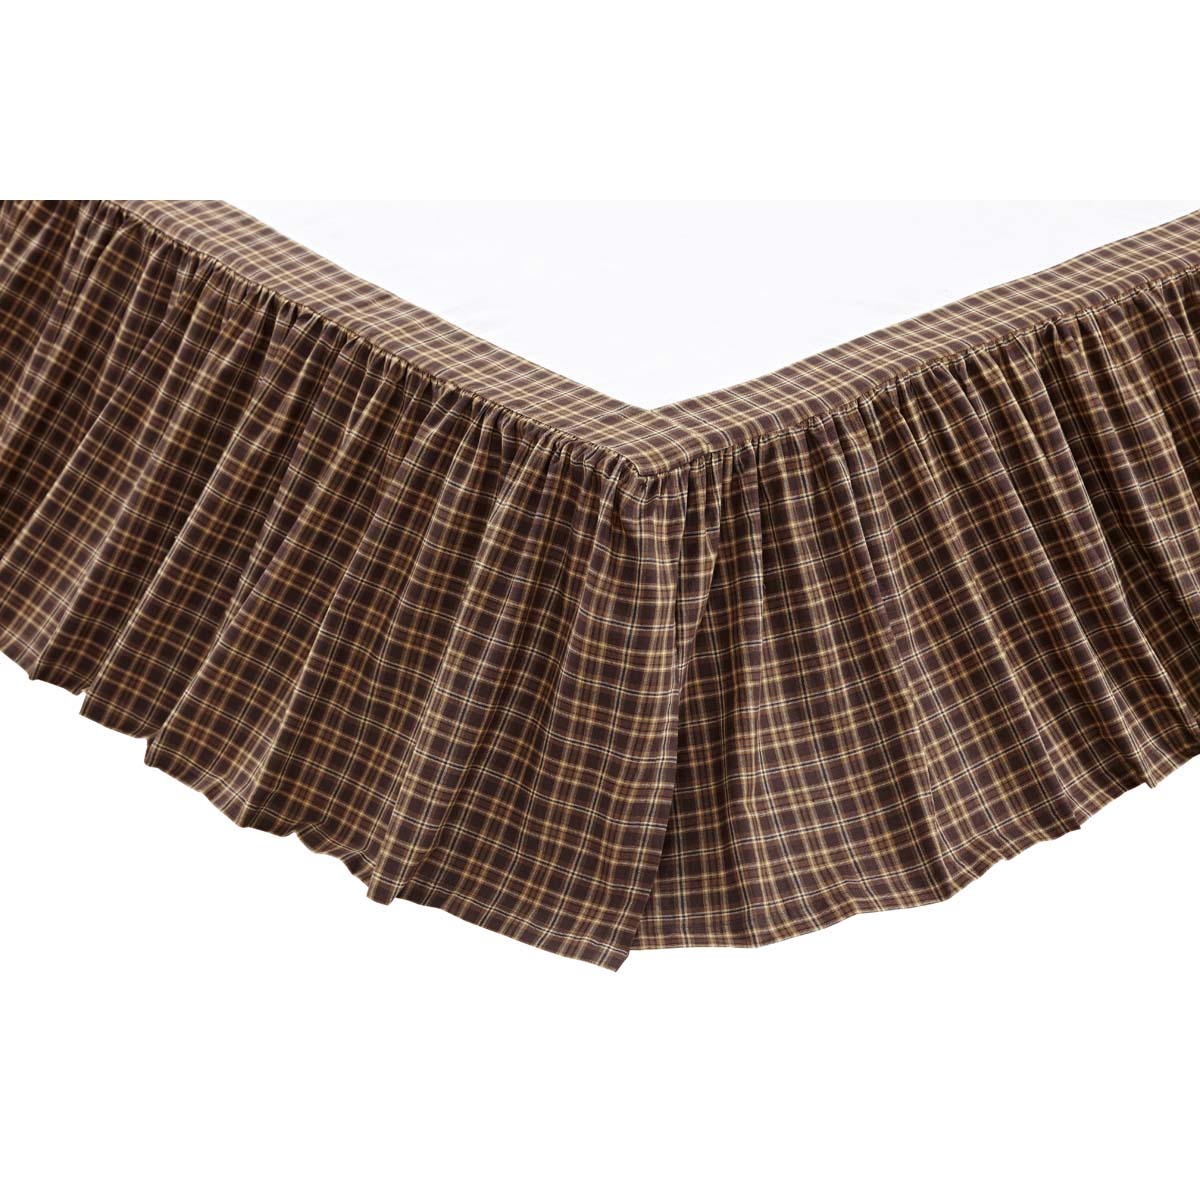 Prescott King Bed Skirt 78x80x16